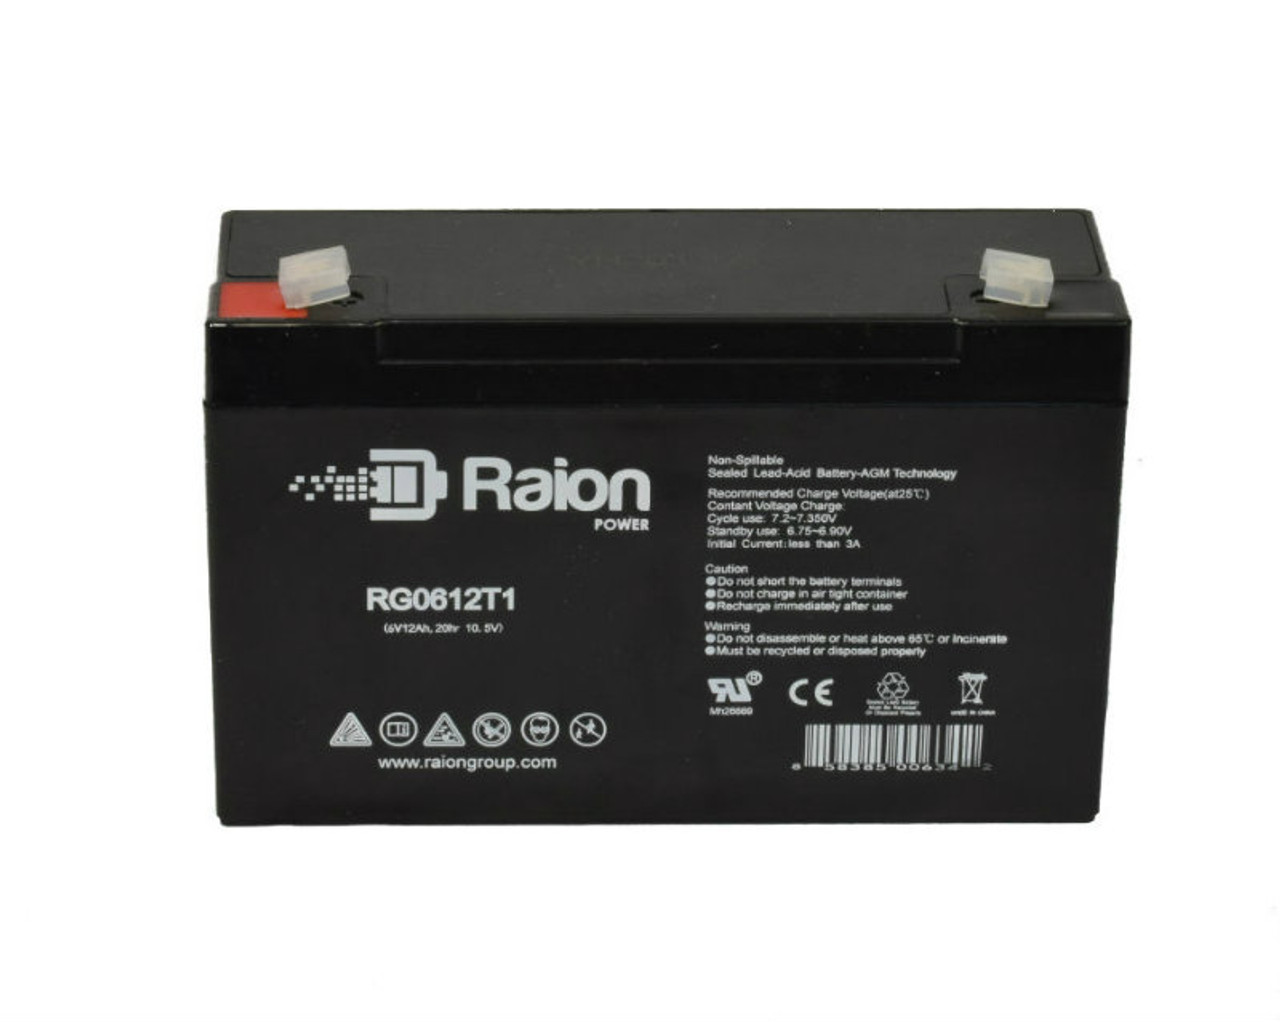 Raion Power RG06120T1 SLA Battery for PPG 603 Vital Signs Monitor